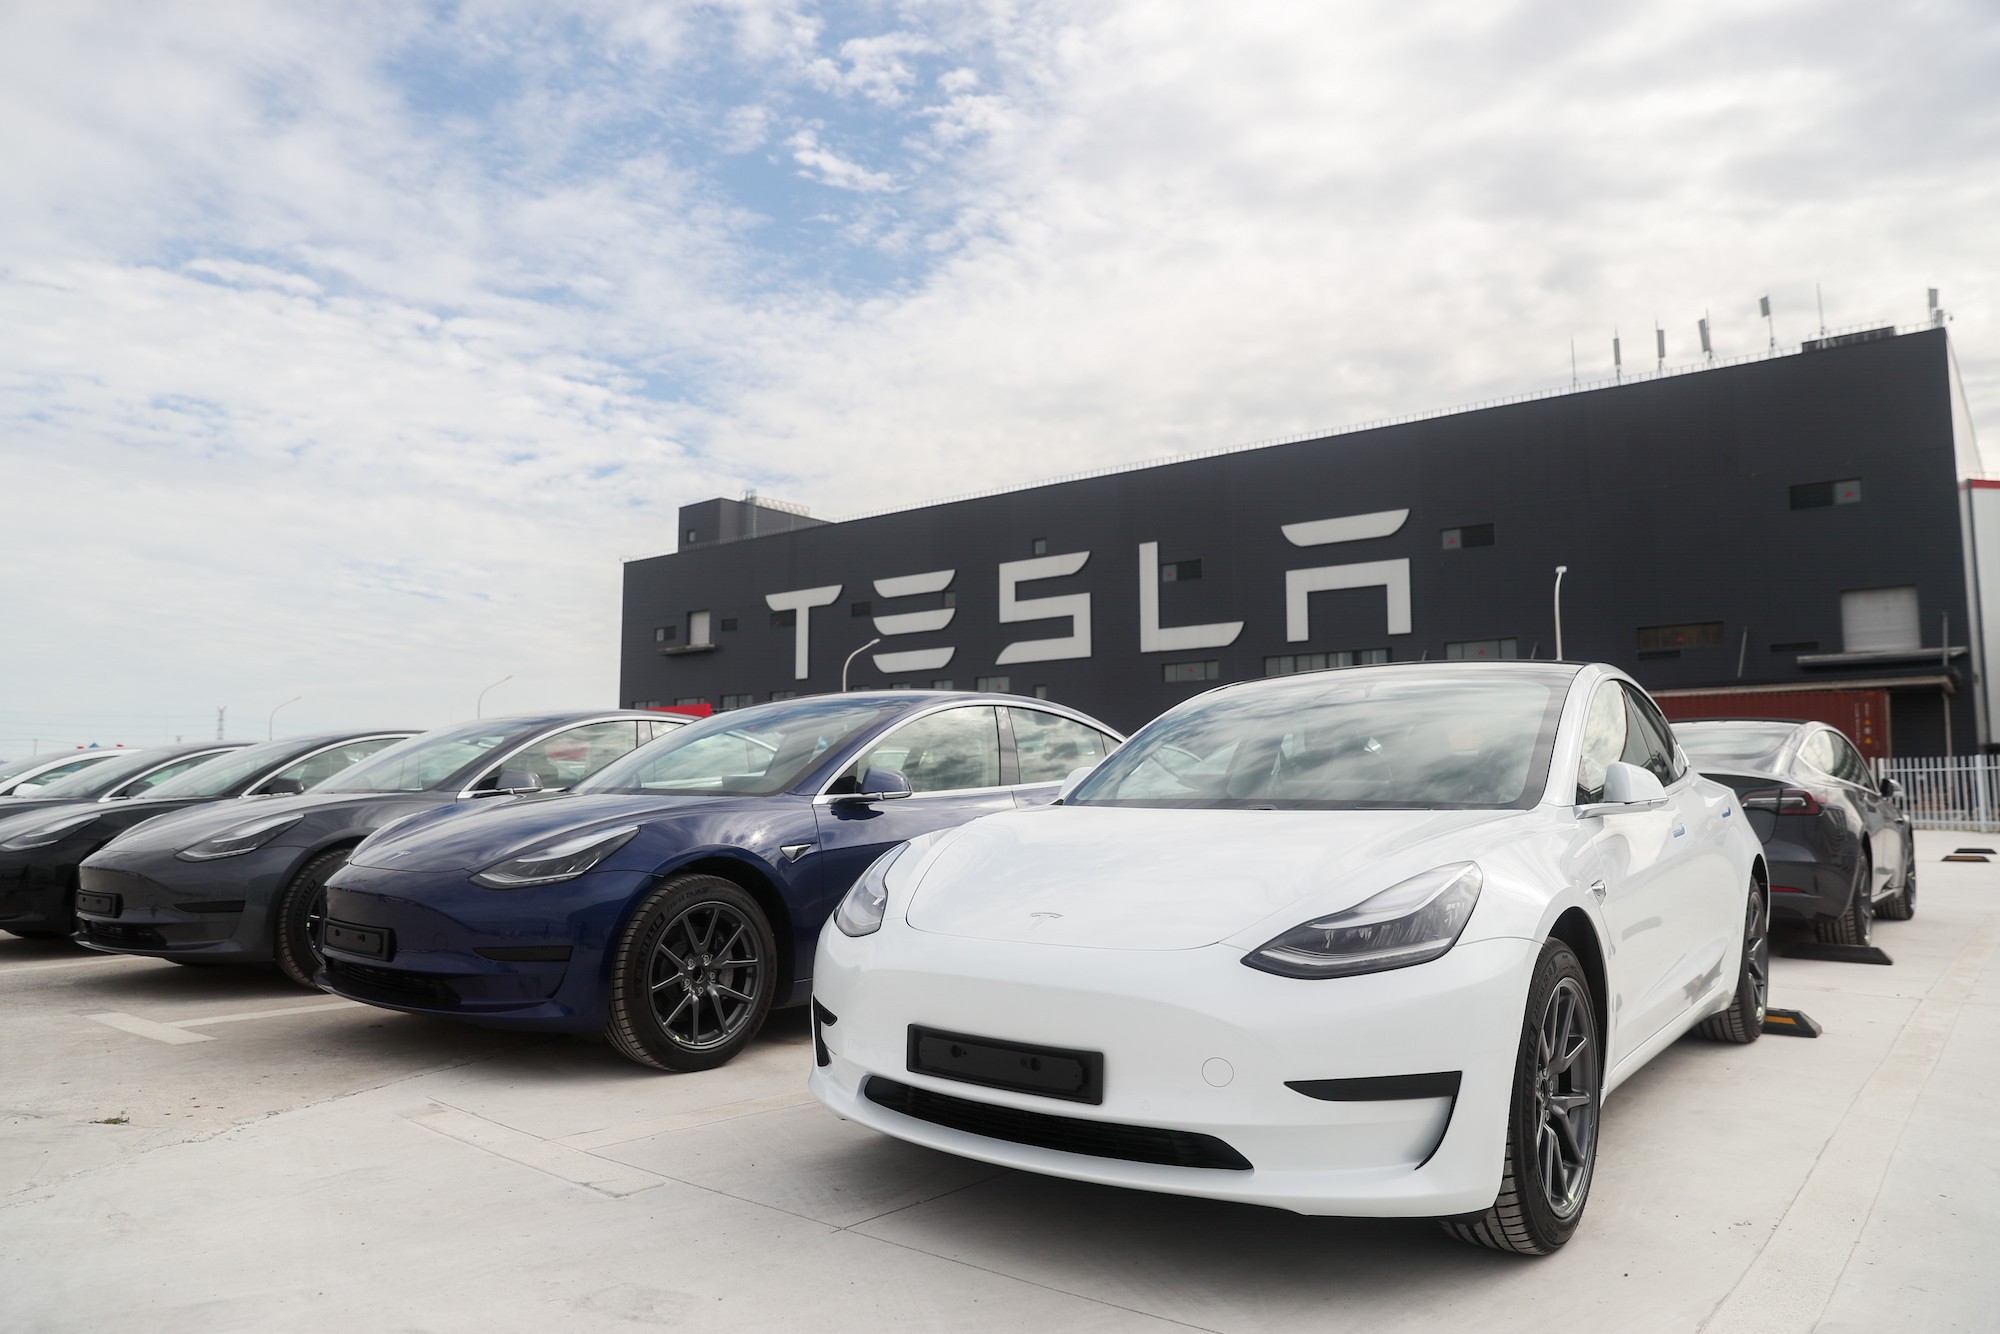 Model 3 EVs at Tesla's gigafactory in Shanghai, China, on October 26, 2020